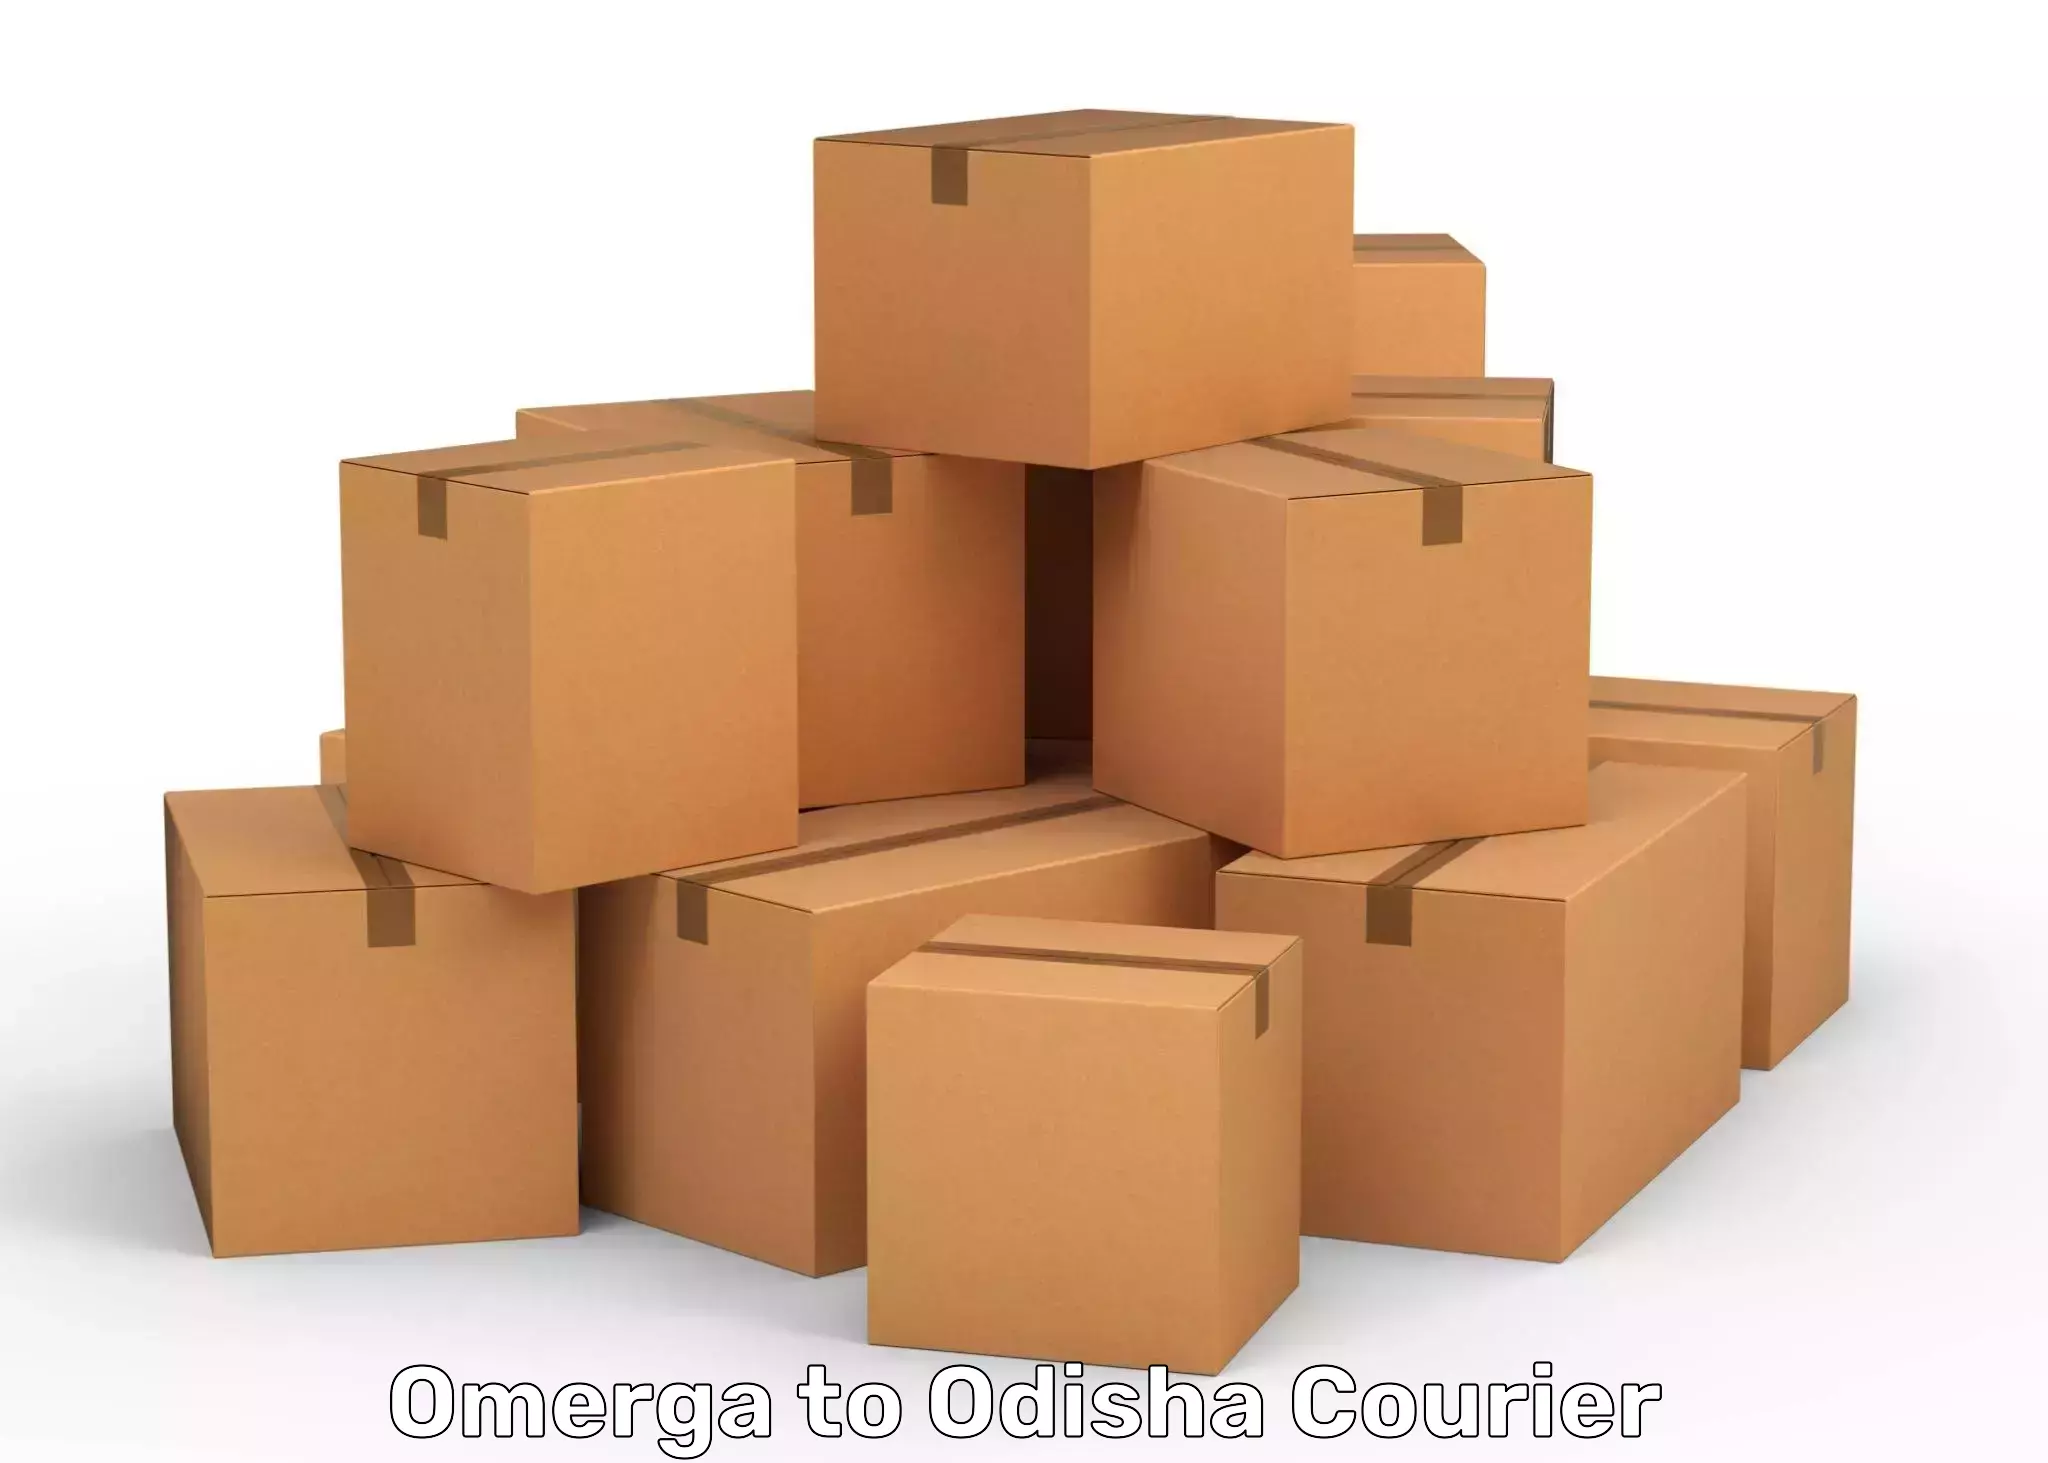 Online package tracking Omerga to Loisingha